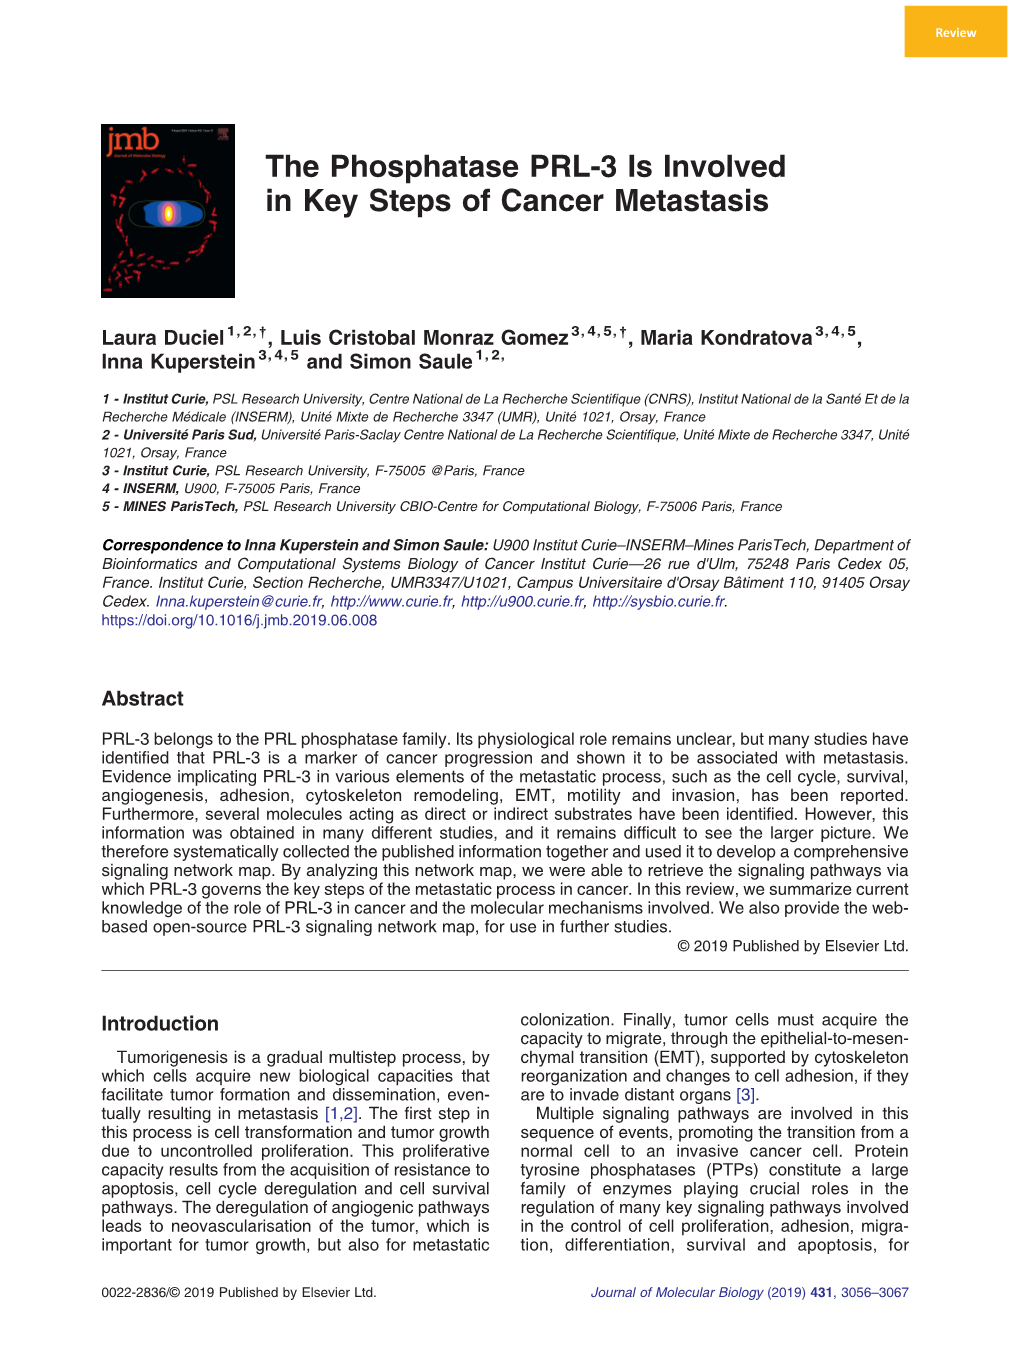 The Phosphatase PRL-3 Is Involved in Key Steps of Cancer Metastasis